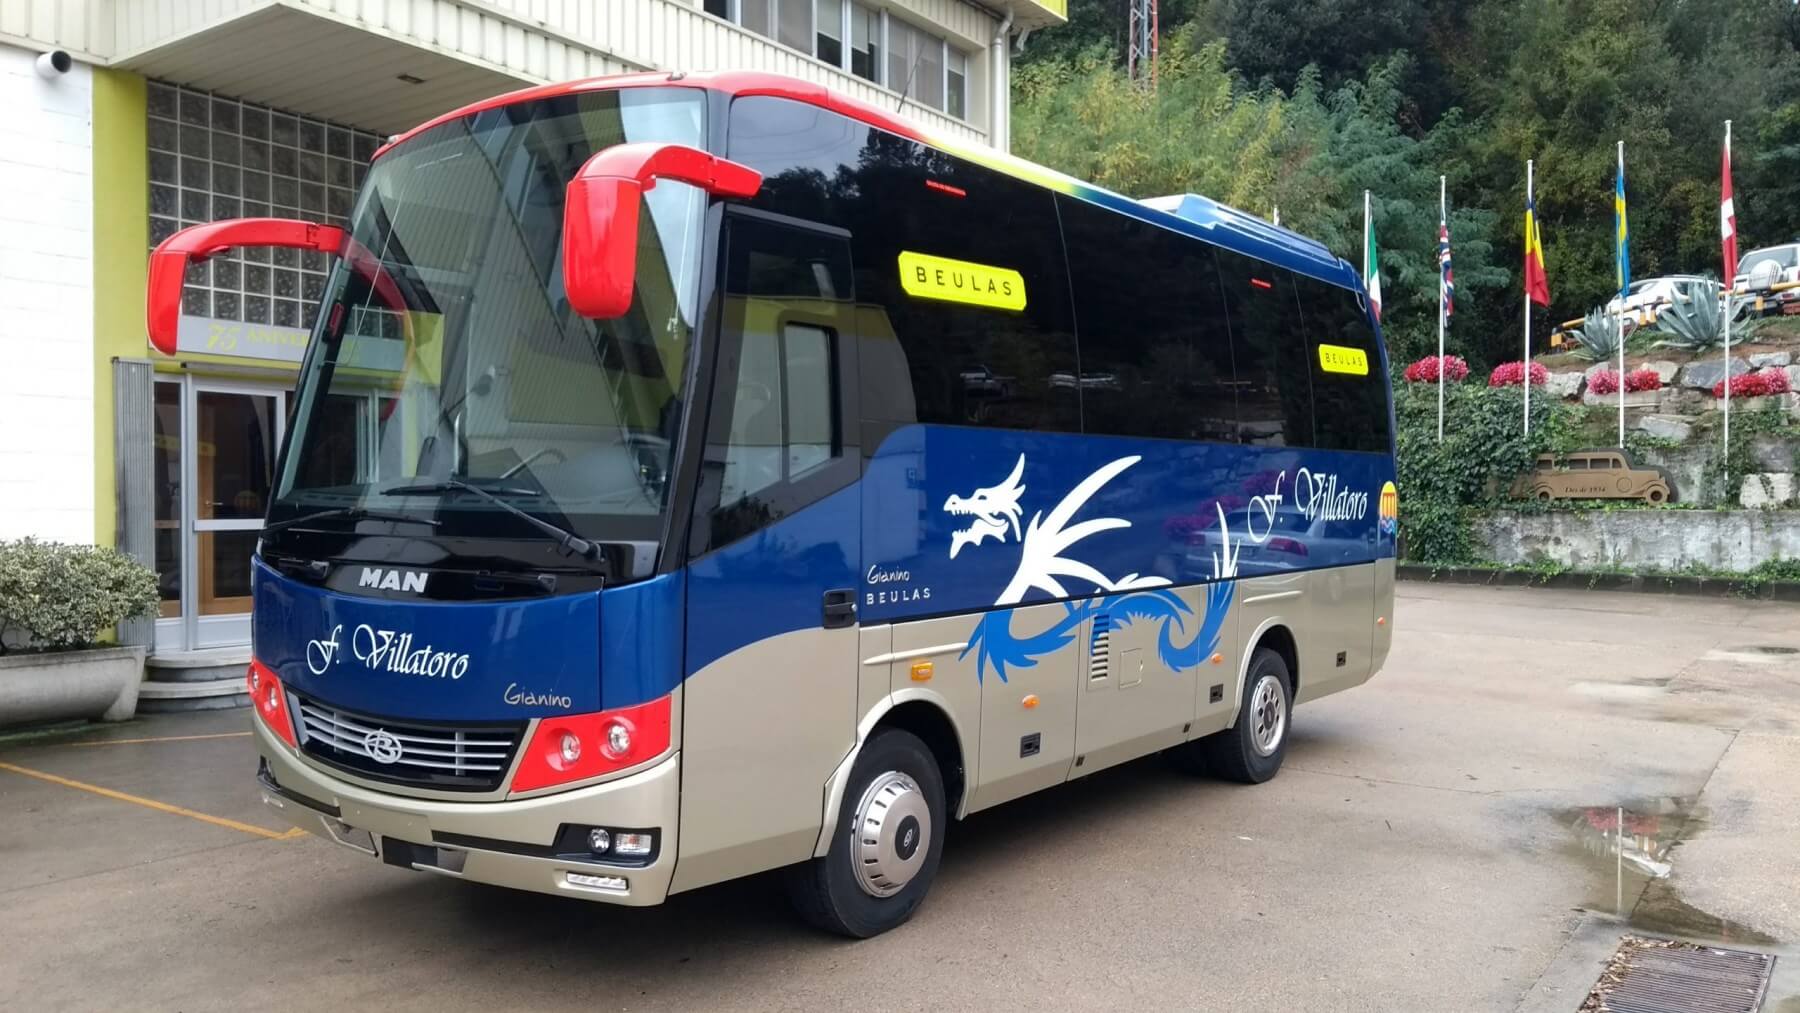 Mieten Sie einen 27 Sitzer Midibus (MAN Gianino 2017) von Autocares Fernández Villatoro S.L. in Castro del Río - Córdoba 